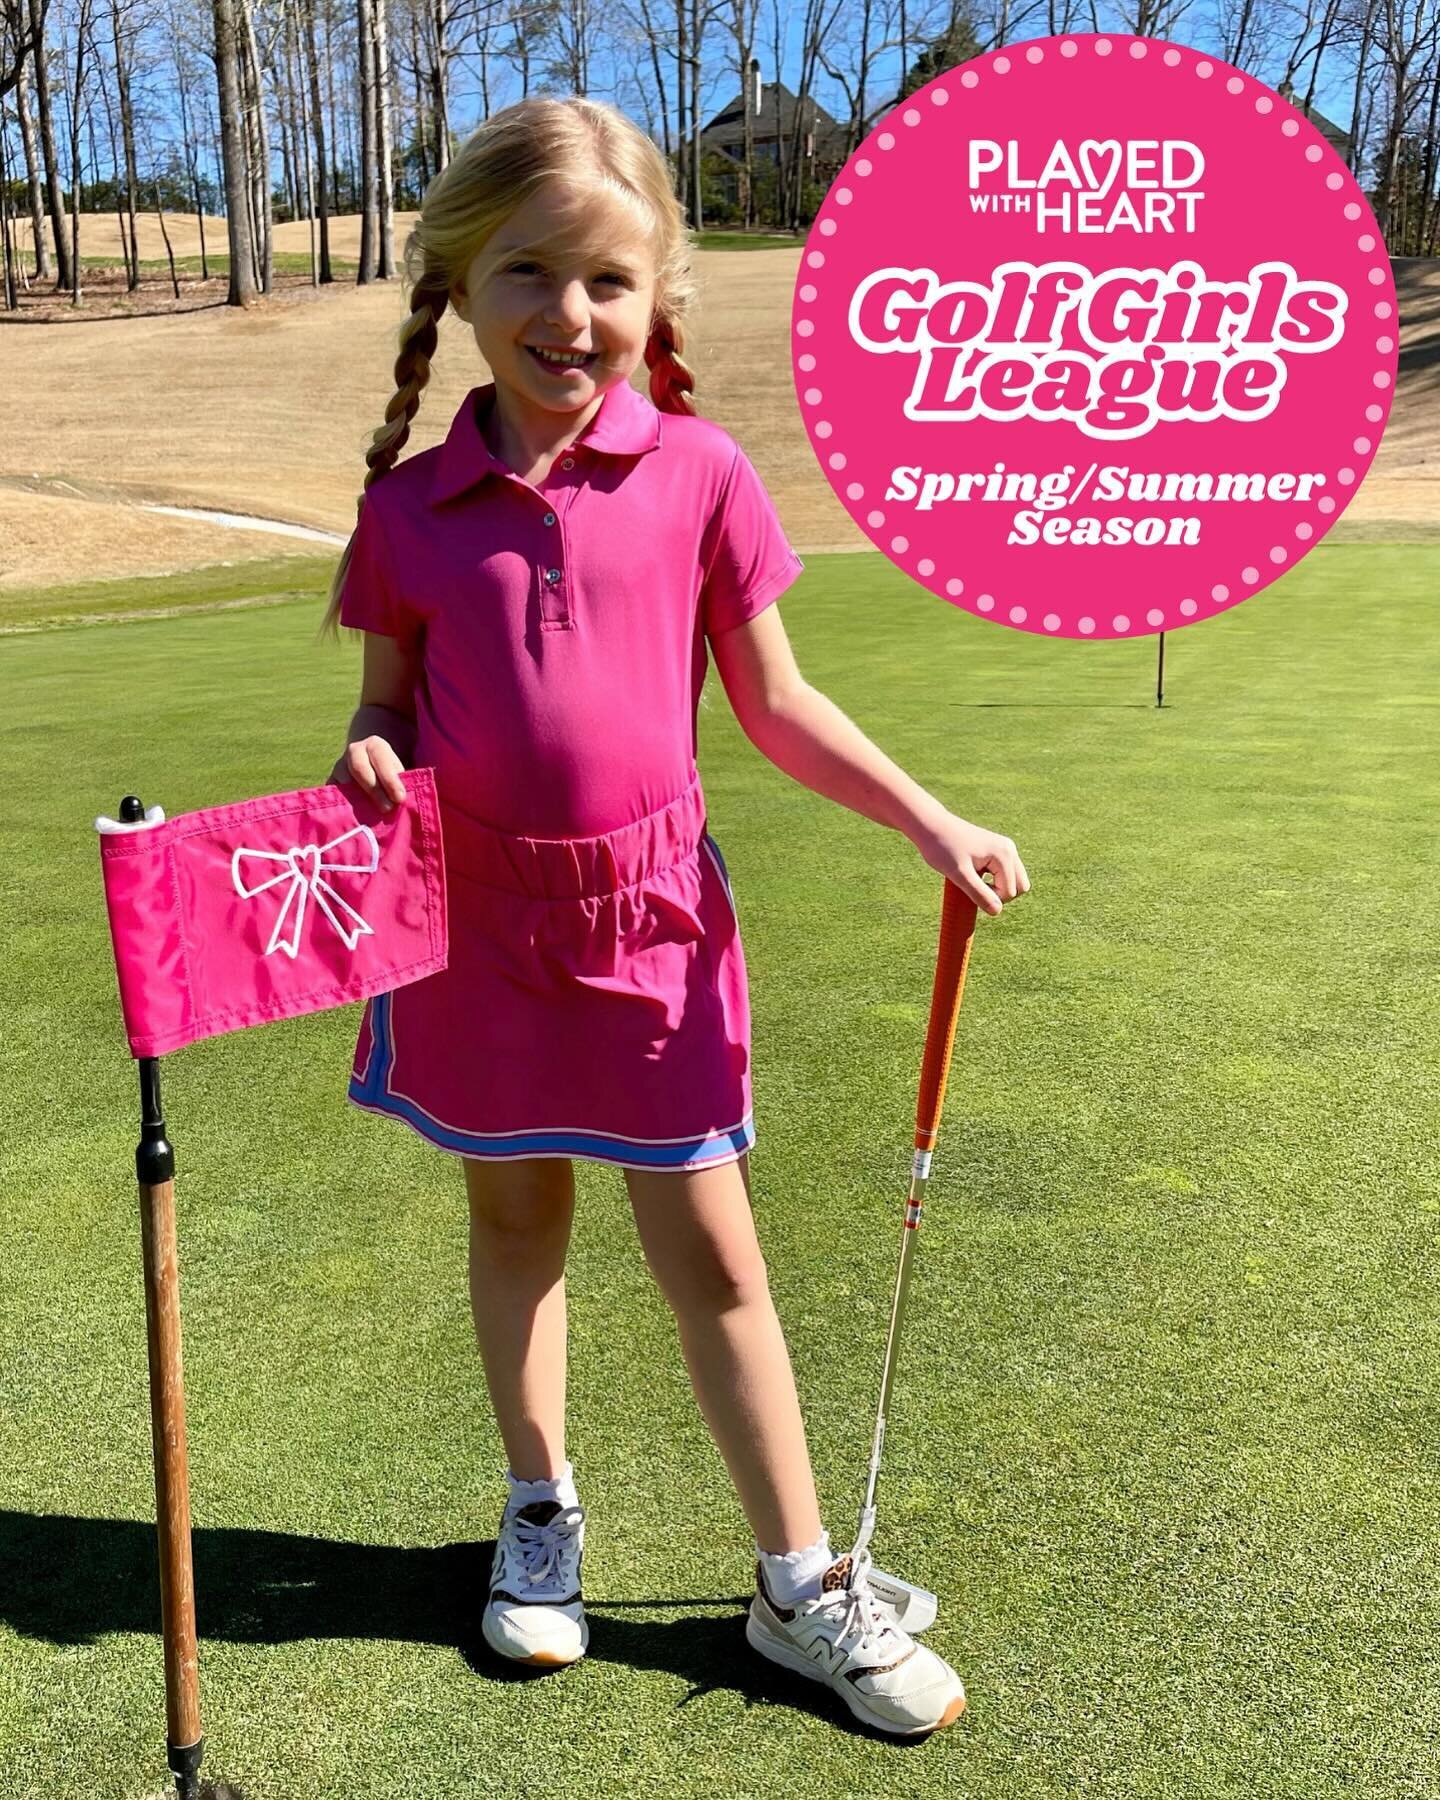 Golf Girls League Spring/Summer Season outfit reveal!!!✨ 🎀🩷⛳️ Registration will open this Wednesday, March 20th!!

#springgolf #juniorgolf #juniorgolfer #girlsgolf #golfgirl #golfgirls #pink #prettyinpink #playwithheart #georgiagolf #golf